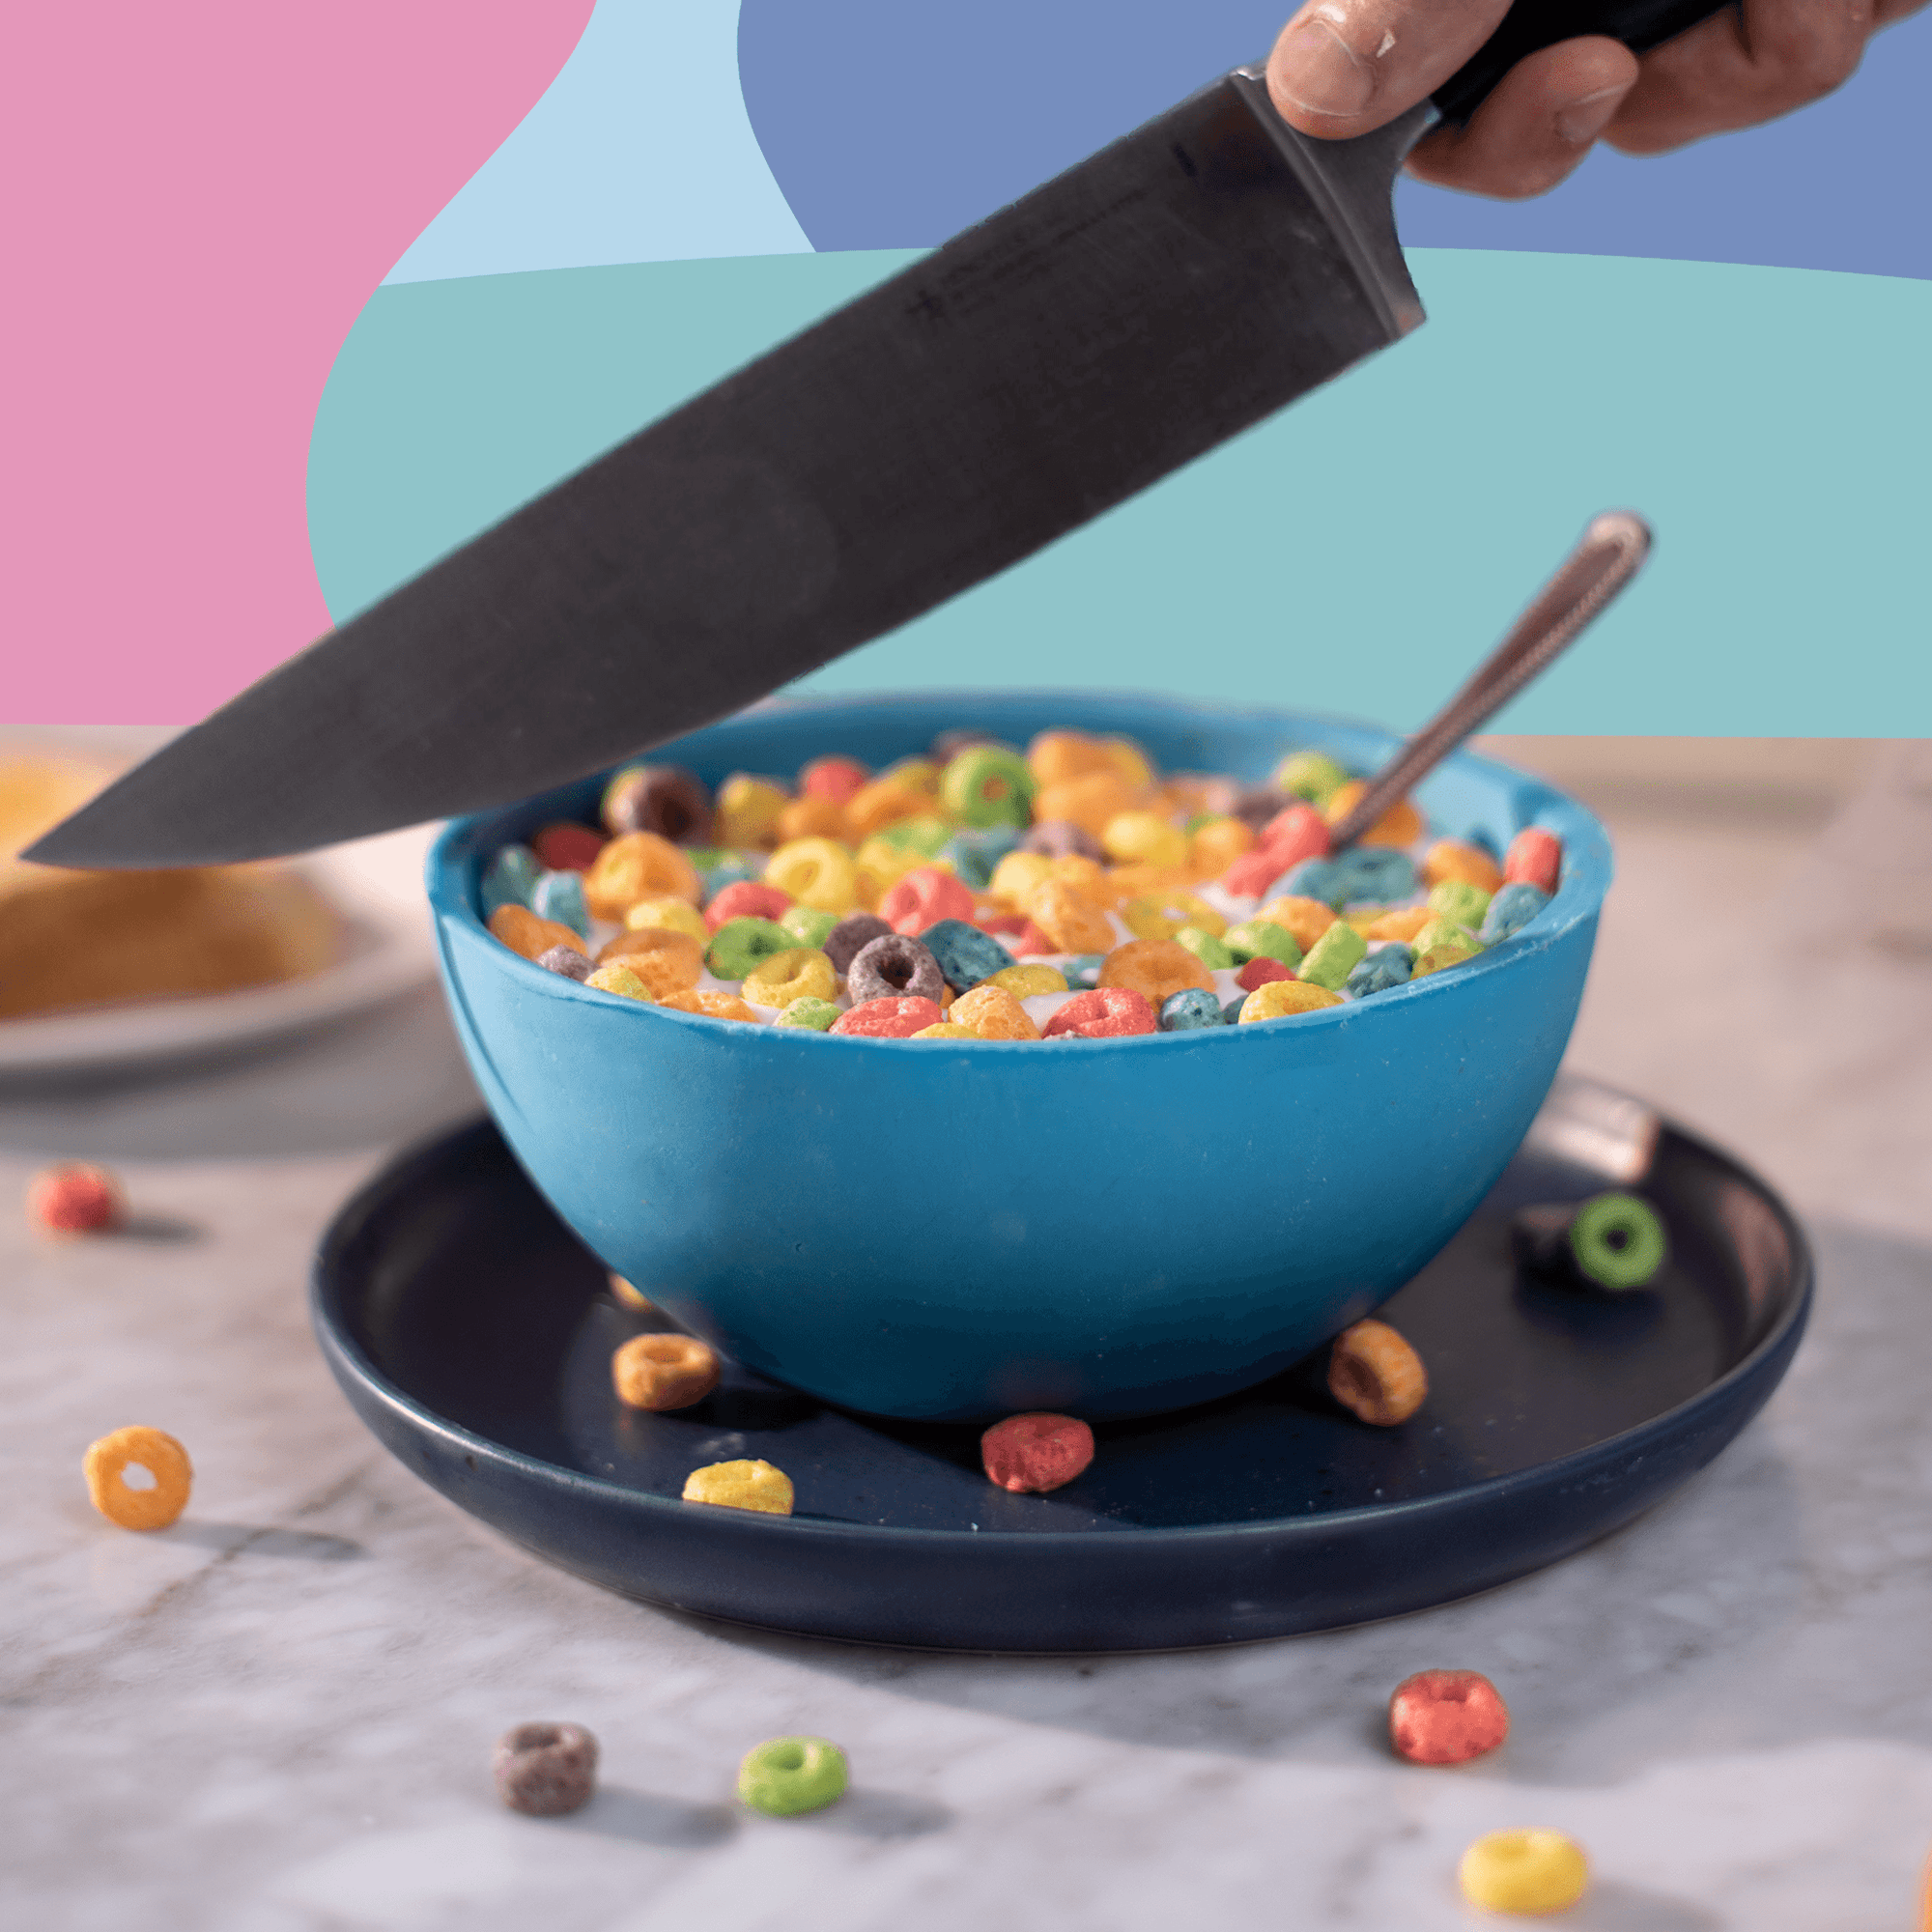 Cereal Bowl Cake Kit & Tutorial - JonnyCakes